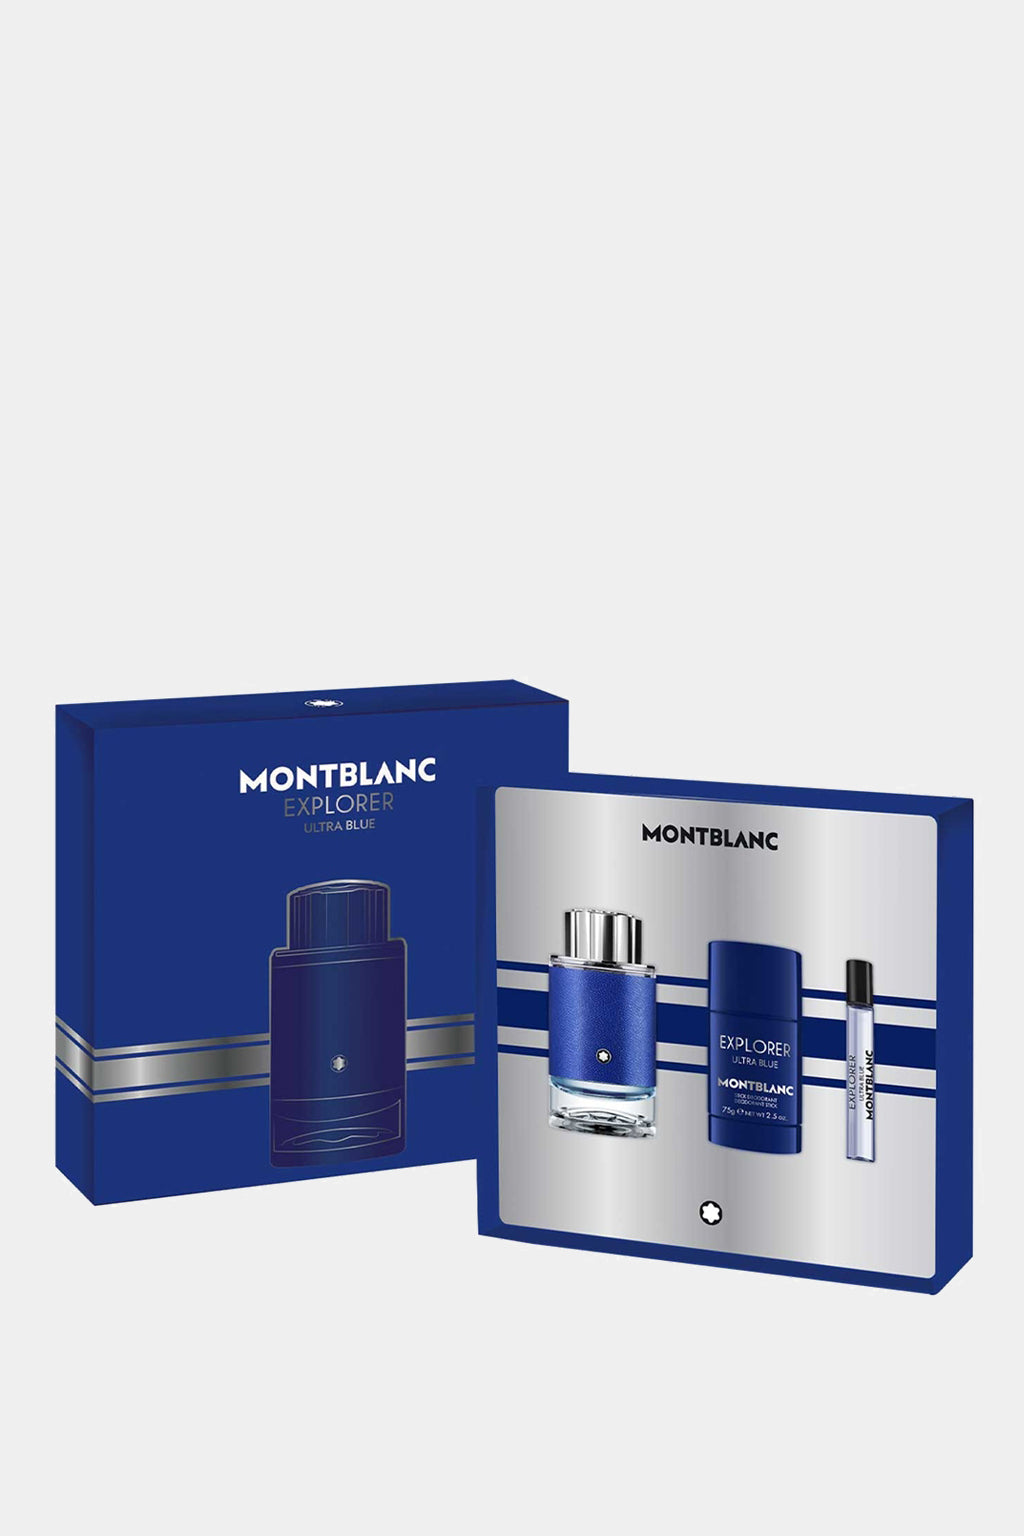 Mont Blanc - Explorer Ultra Blue - Eau de Parfum 100 ml + 7.5 ml + Deodorant stick 75 Gram Gift Set